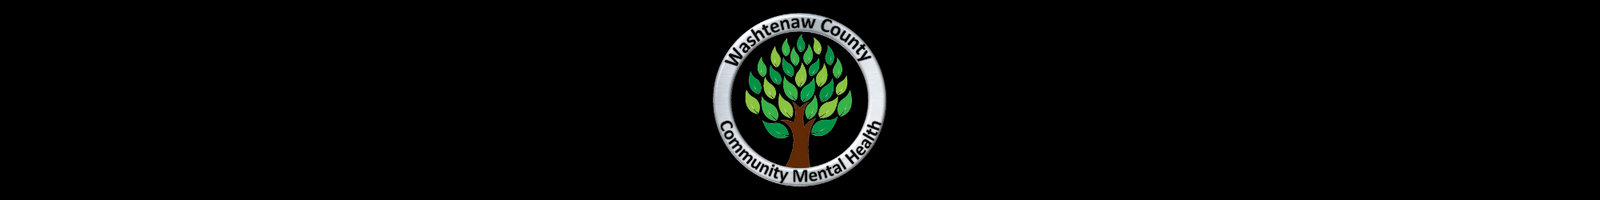 Washtenaw County Community Mental Health